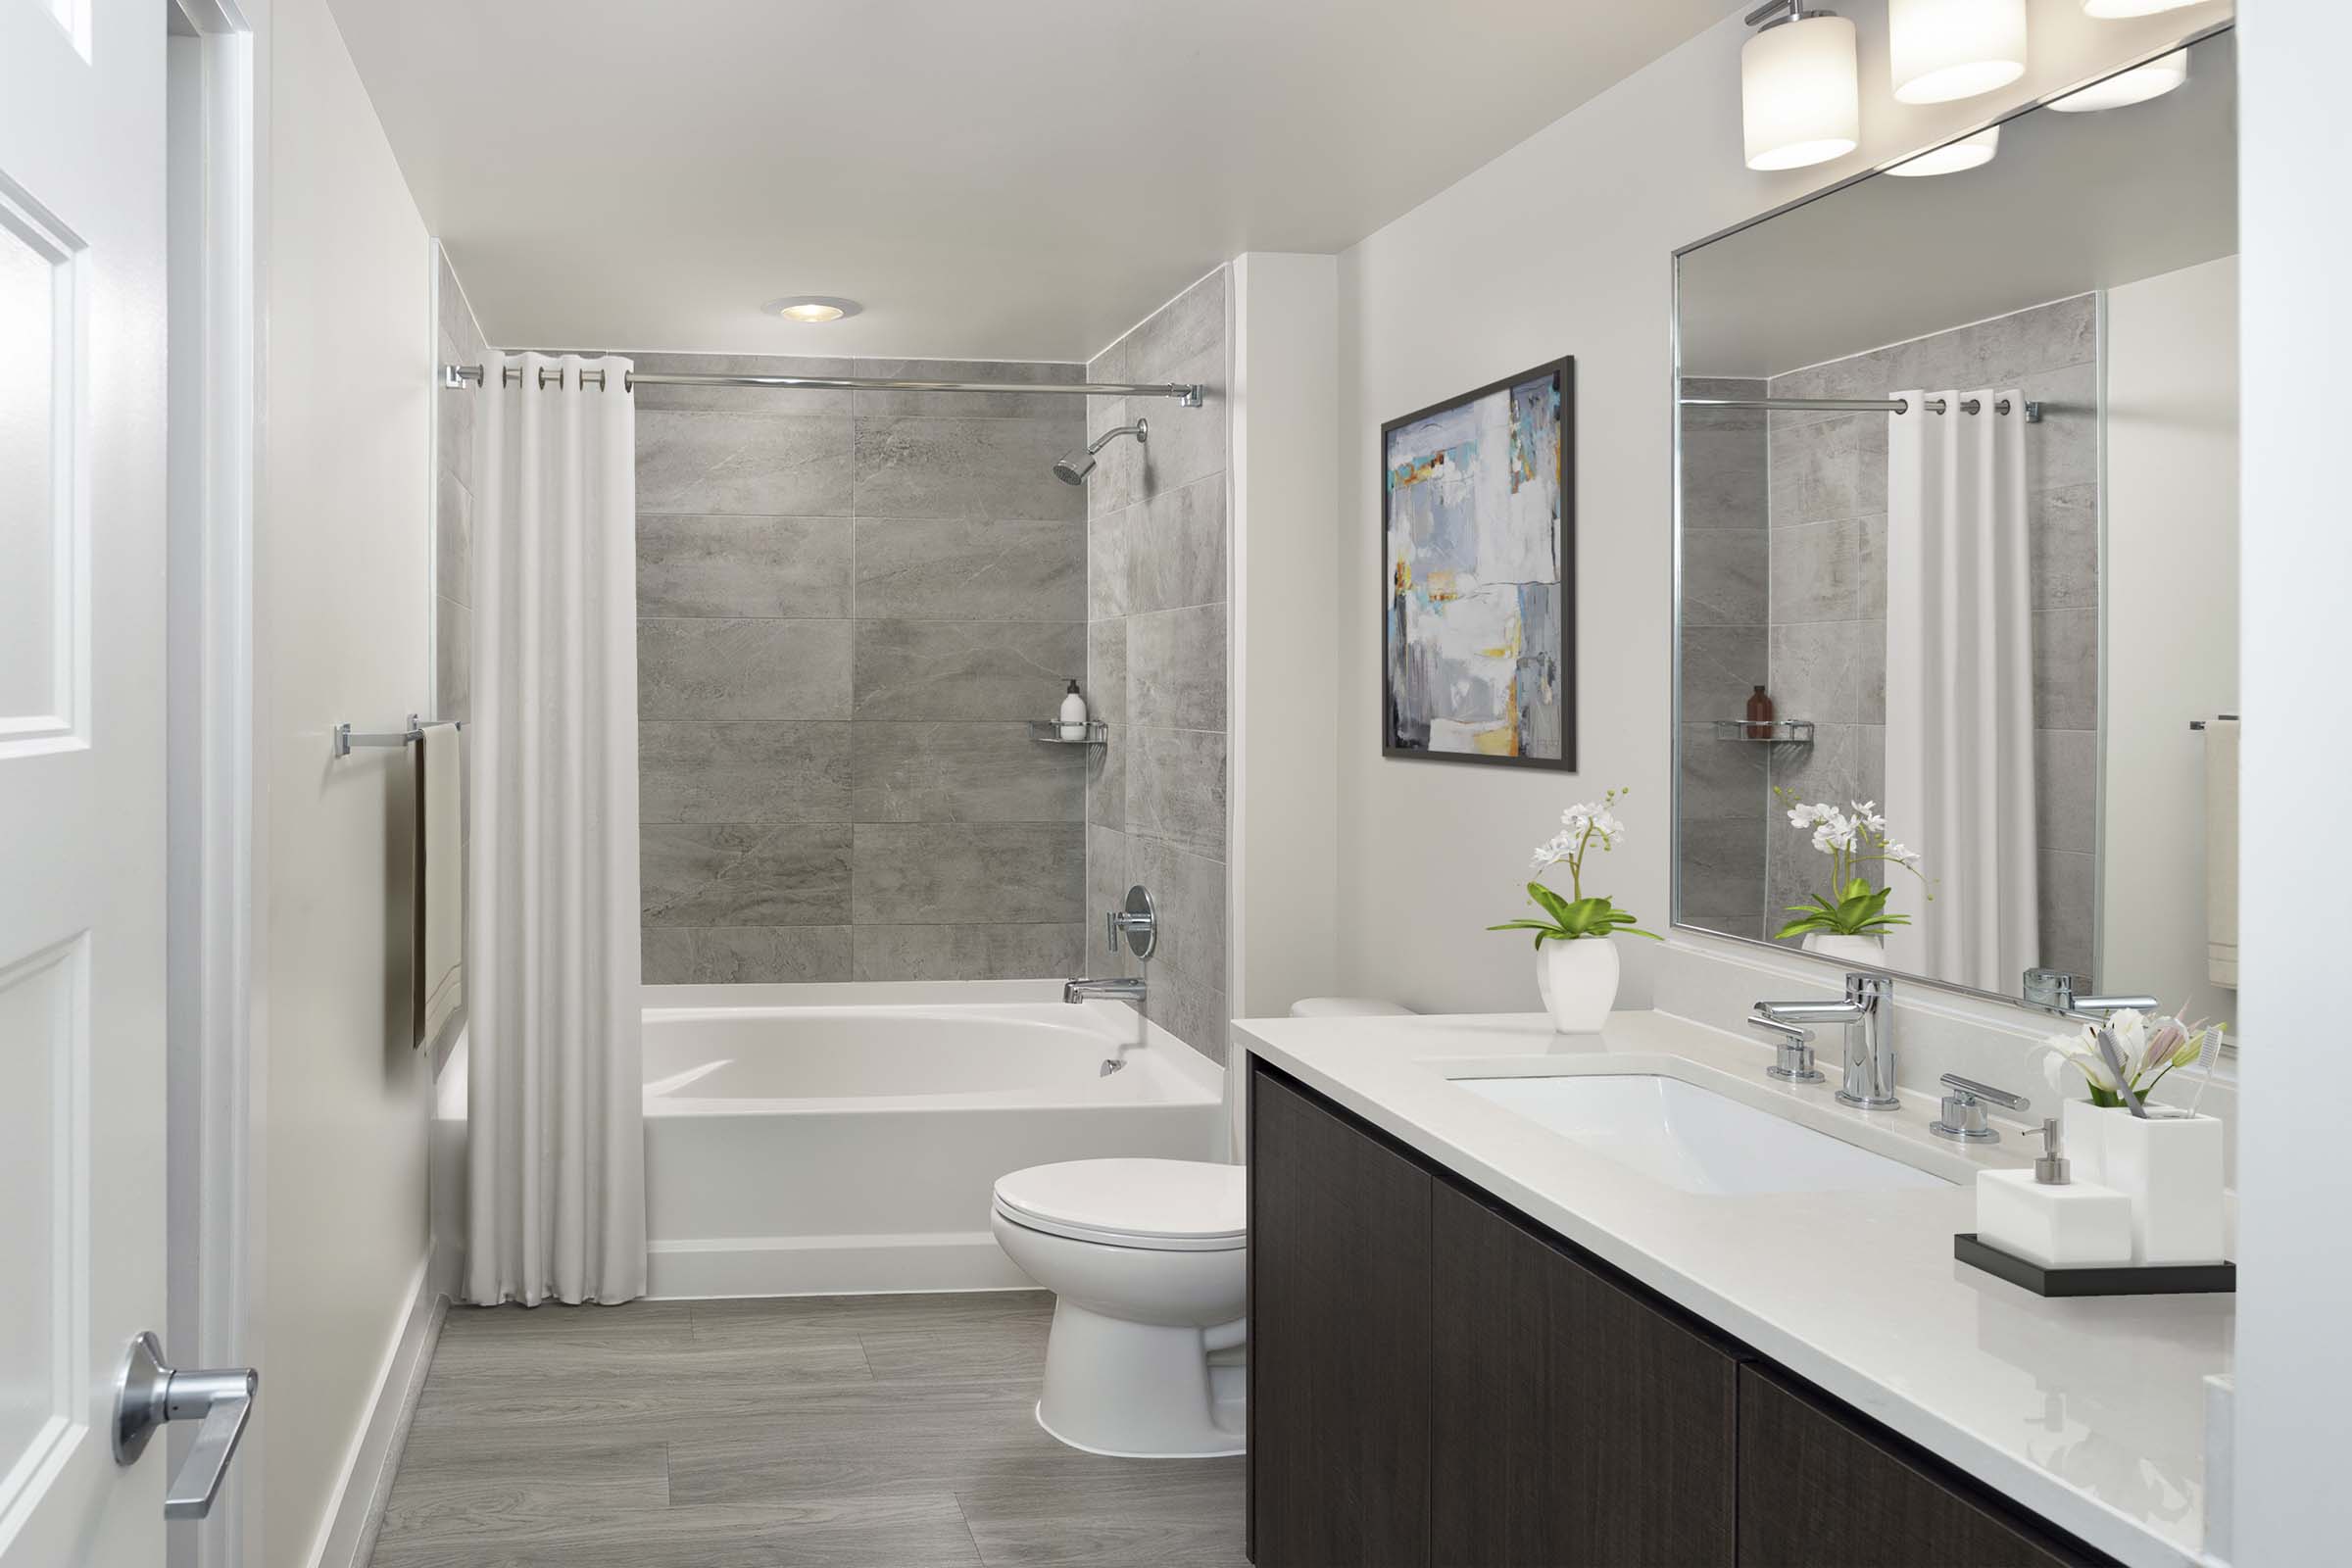 Sleek contemporary style bathroom with bathtub